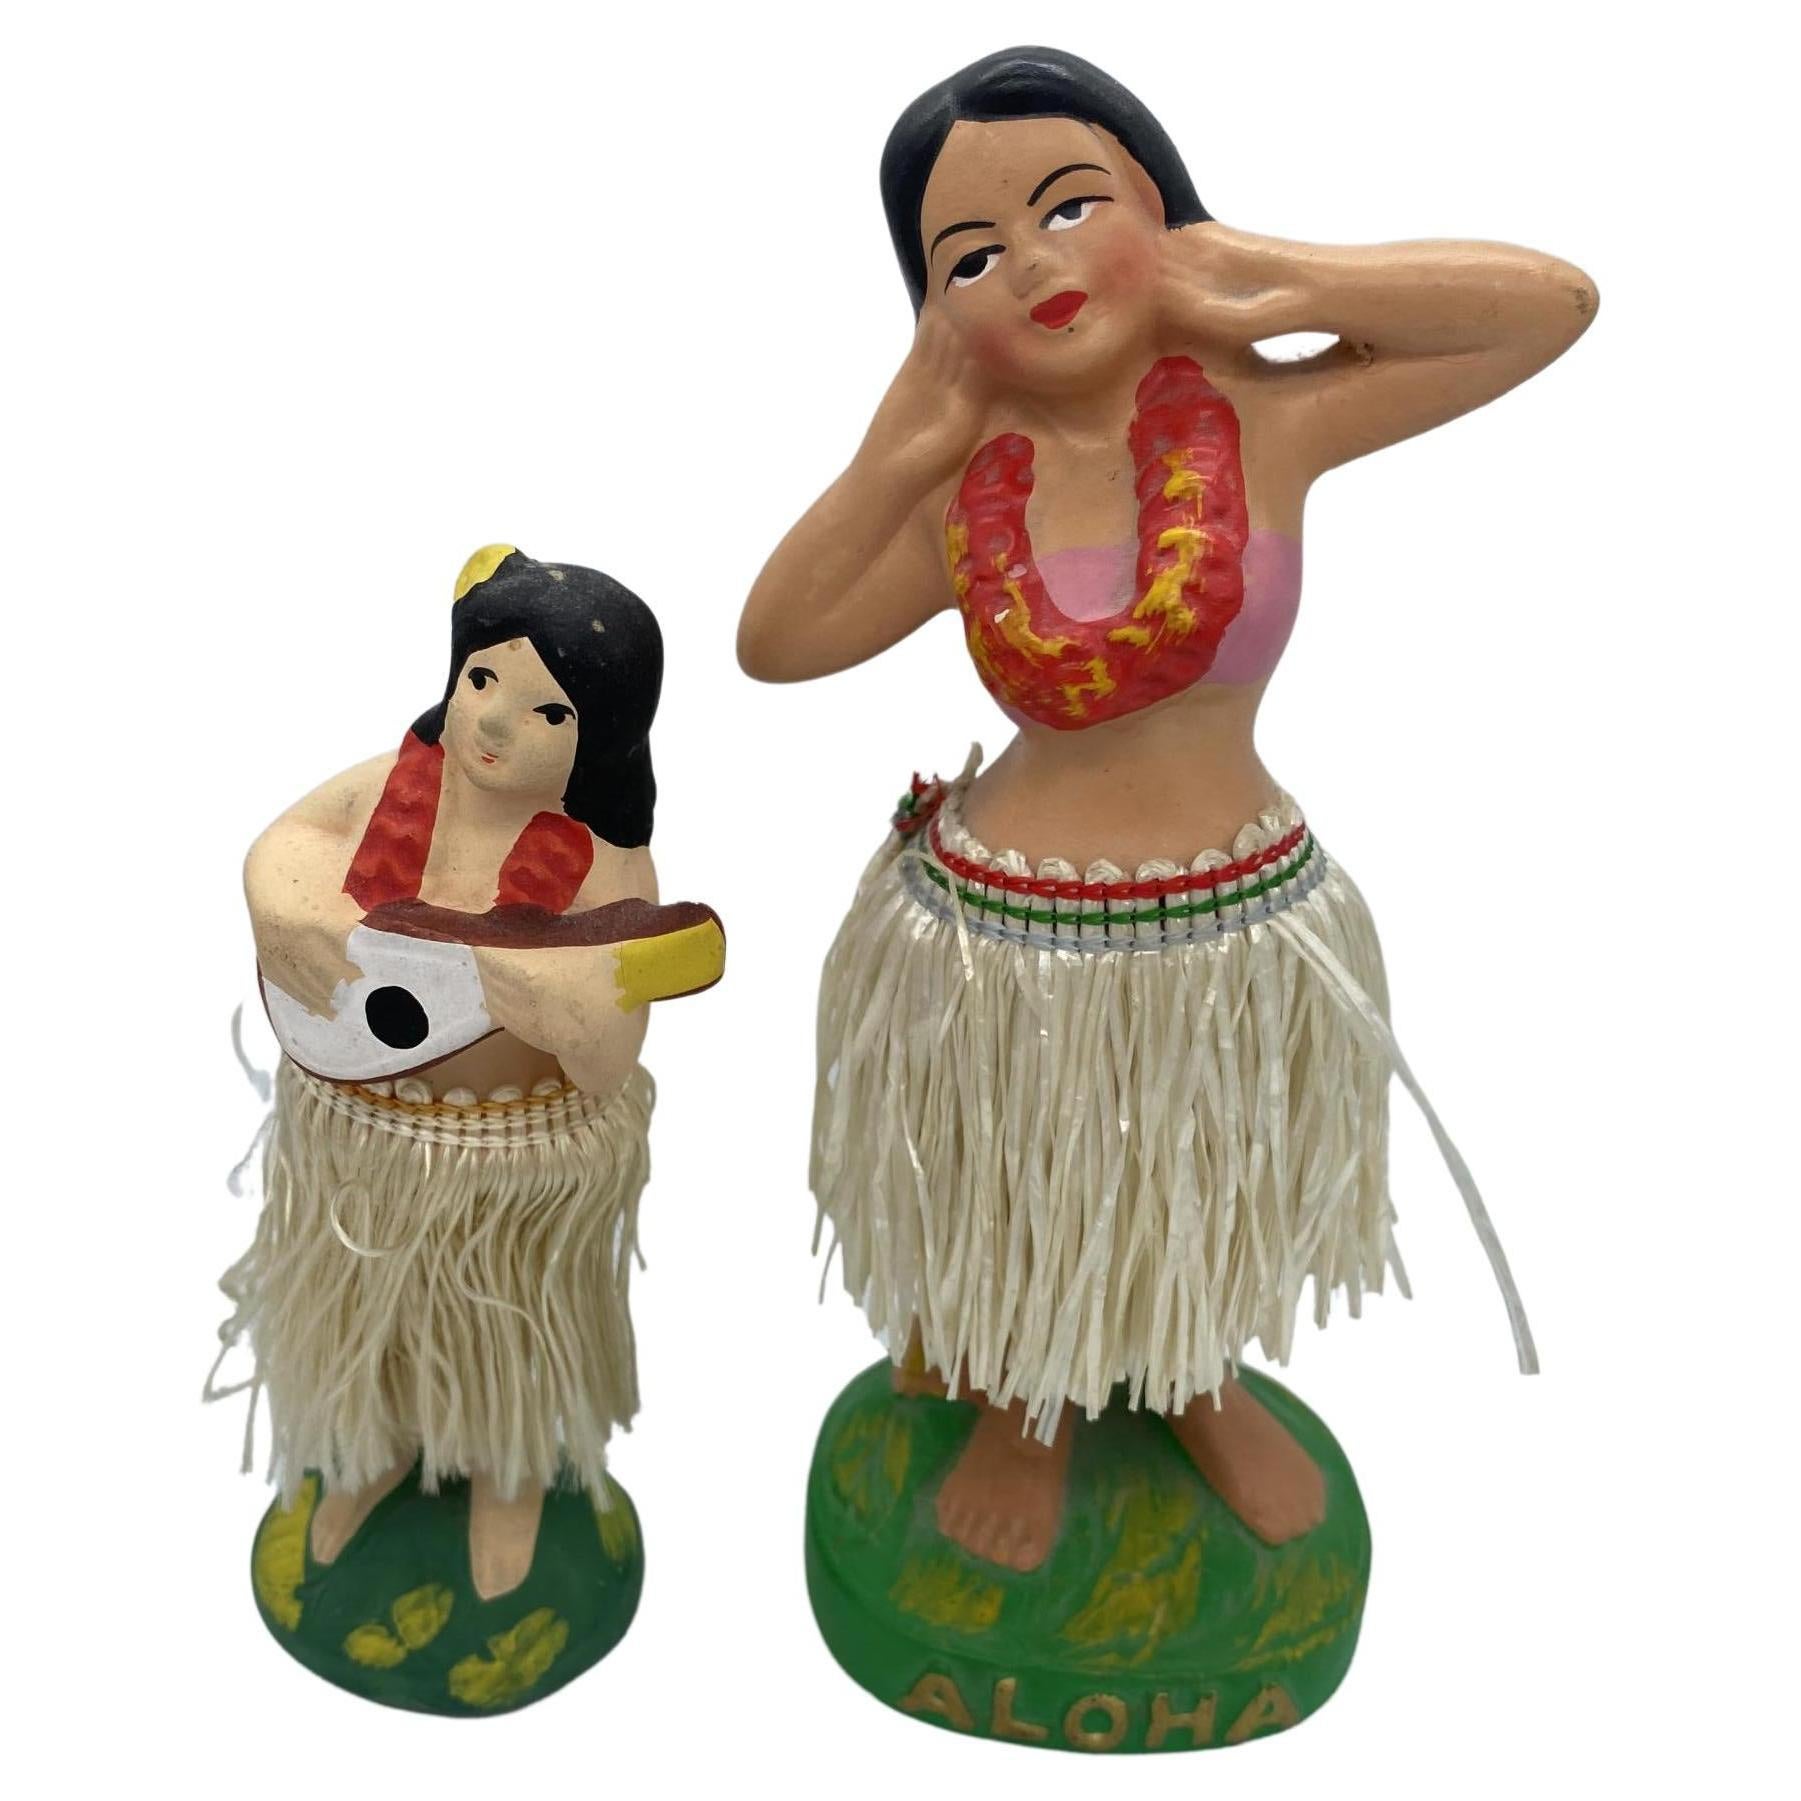 Free Ship tropical island dancer girl Details about   Hawaiian Island Hula Dancer Ceramic Tile 